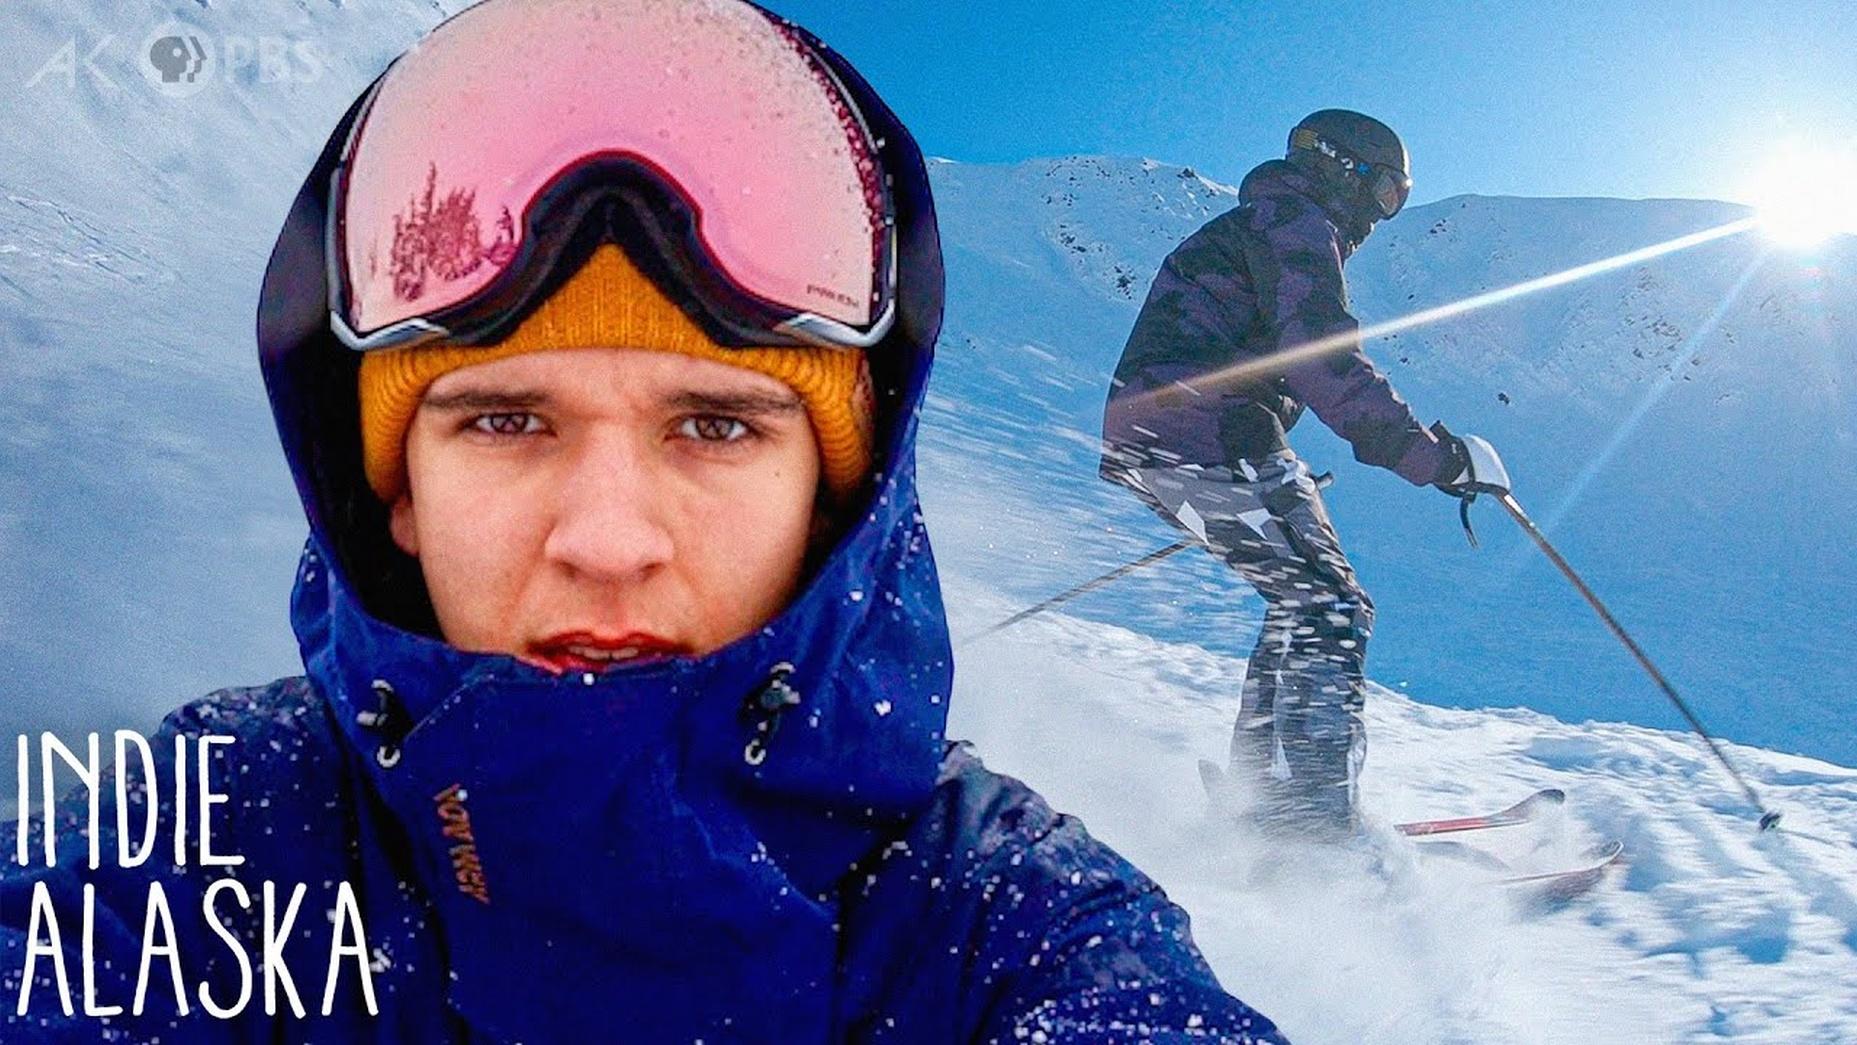 Skiing Alaska’s extreme slopes with videographer Luka Bees.